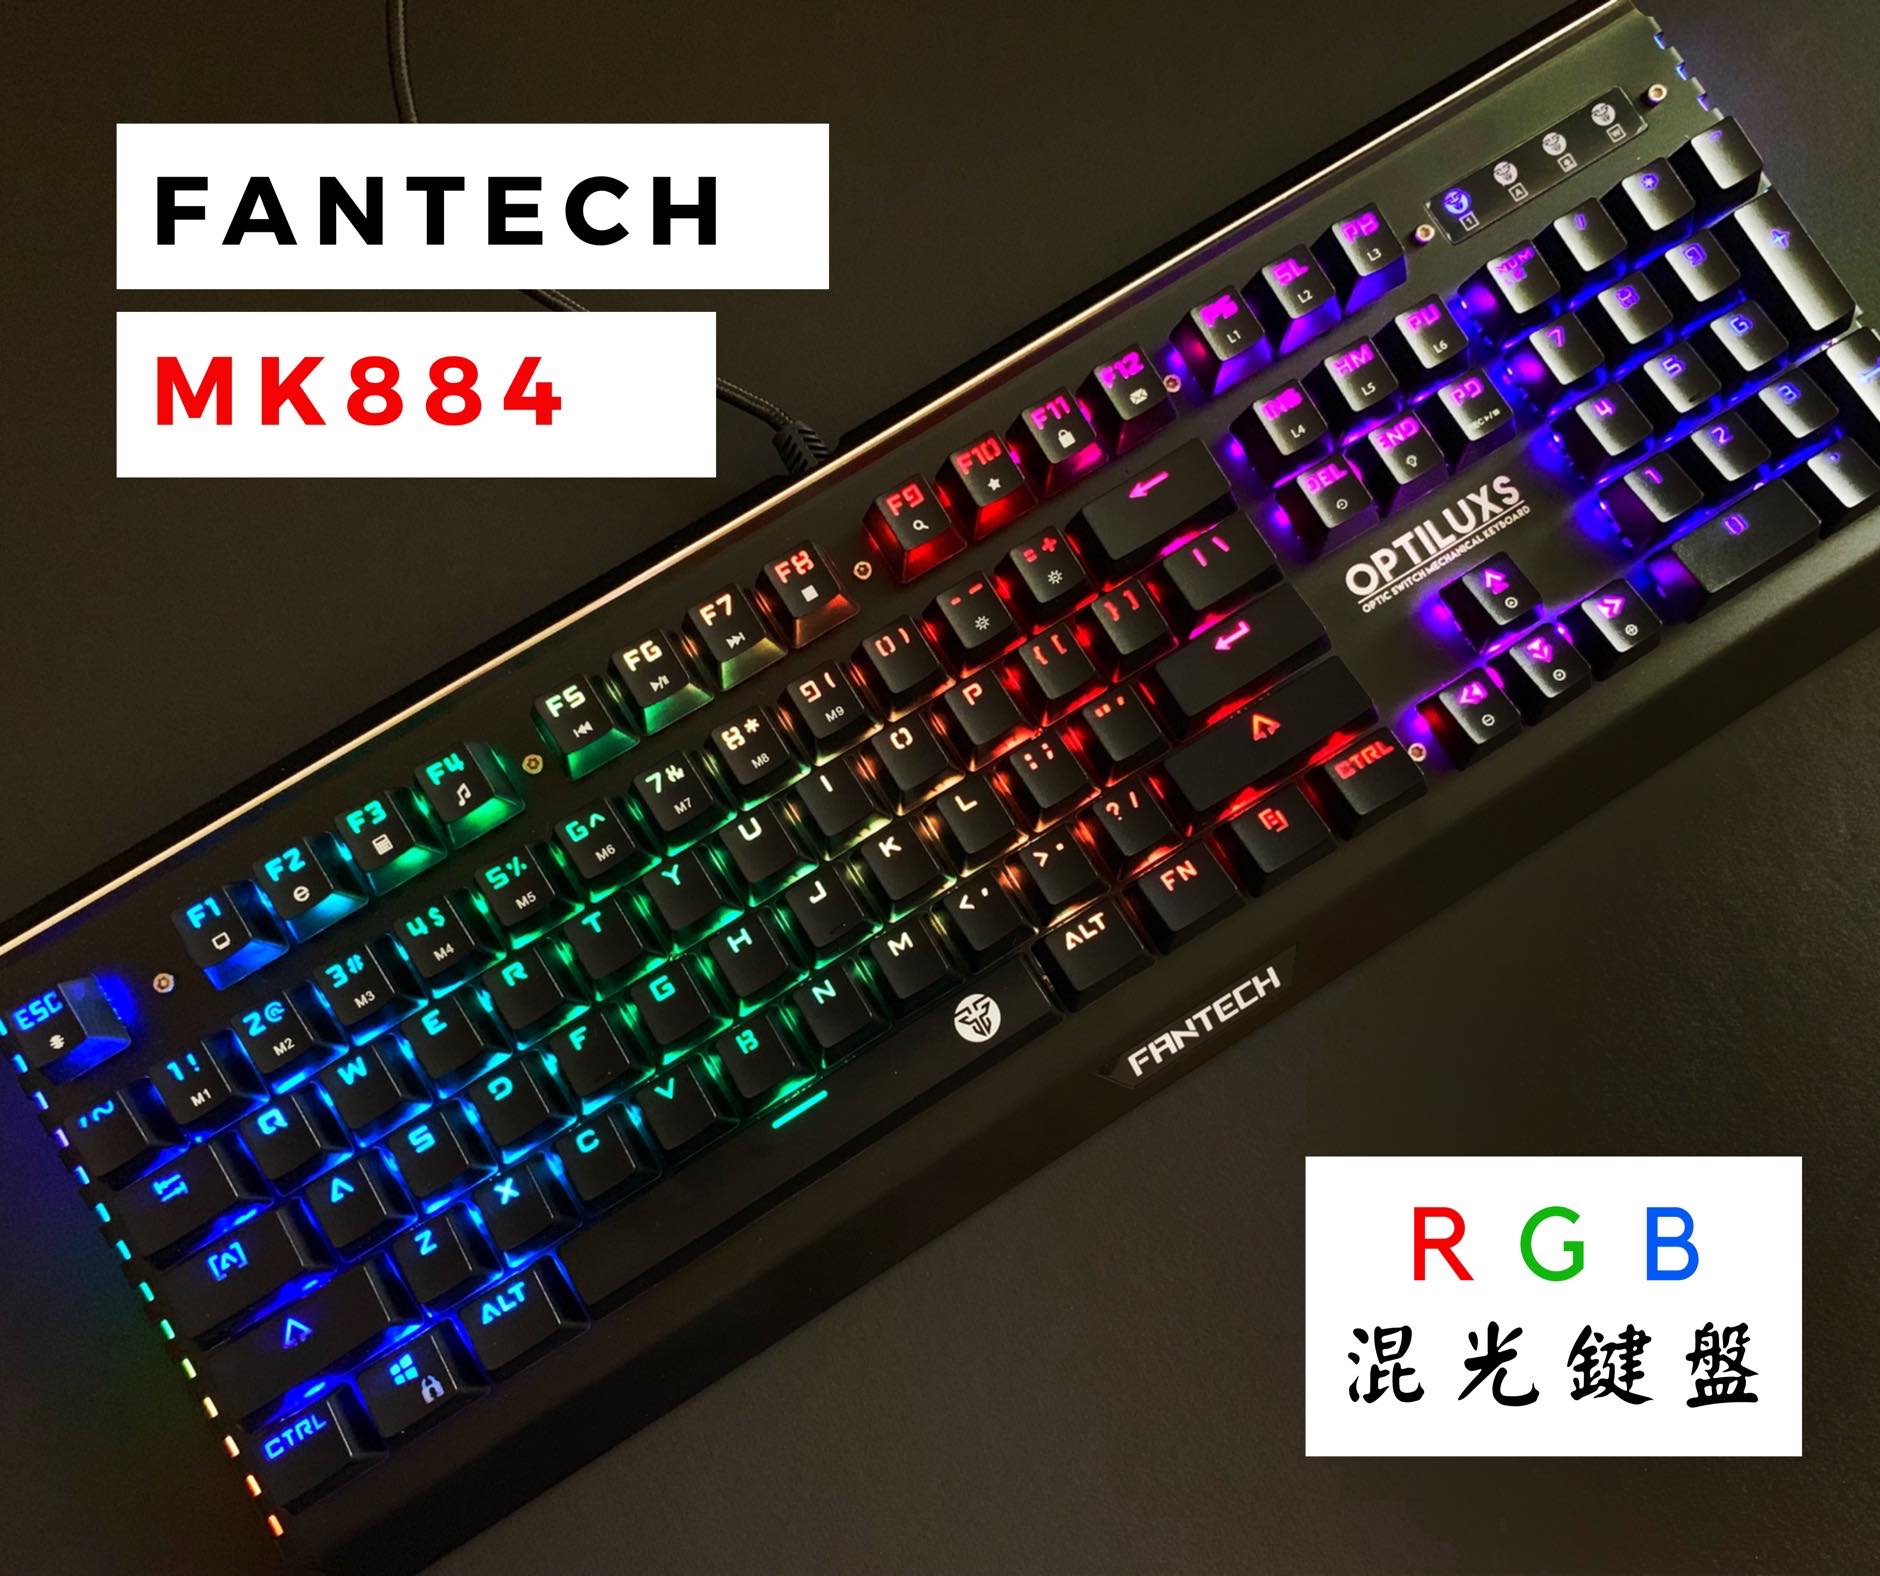 FANTECH MK884 機械式電競鍵盤 - RGB多彩燈光設計、光軸採用最新光學開關技術 - 機械式鍵盤 - 科技生活 - teXch